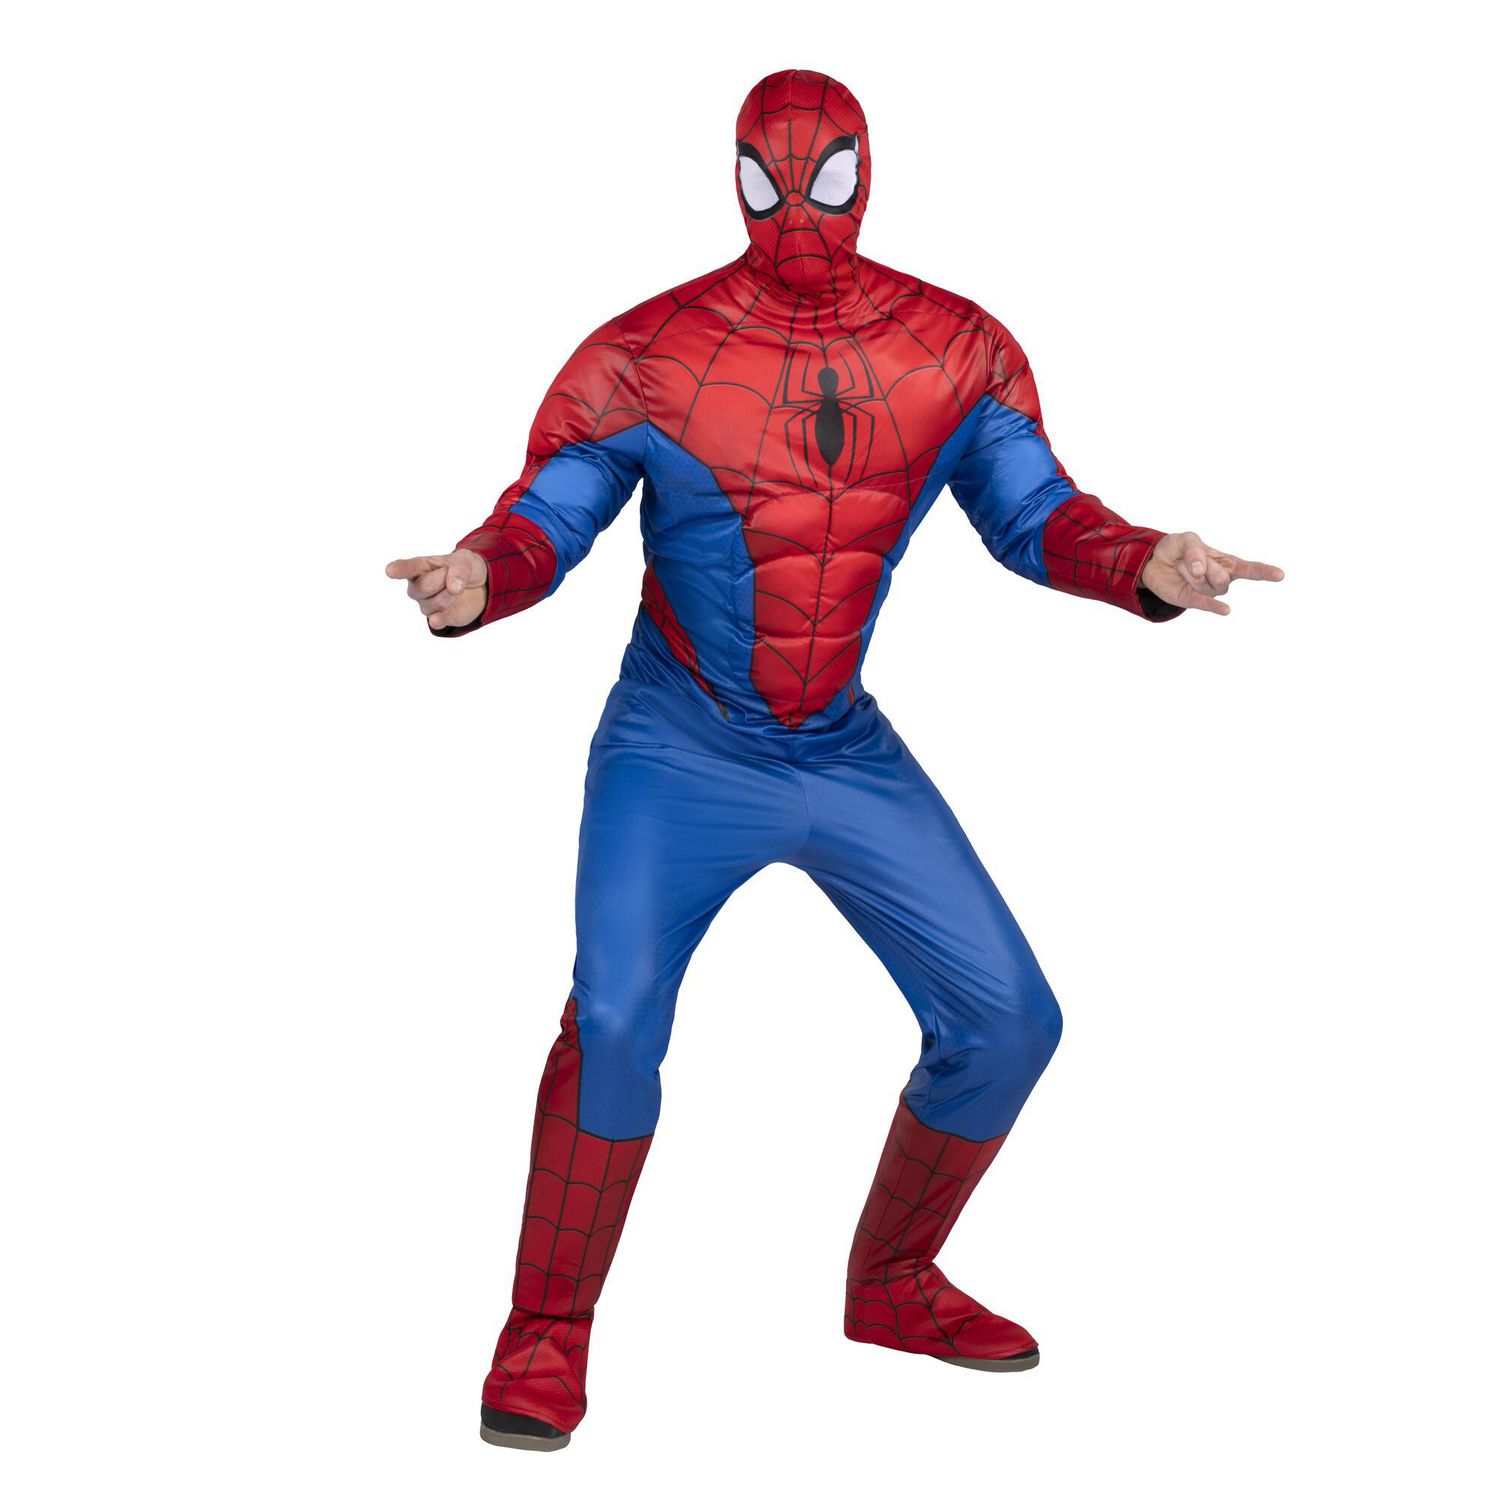 MARVEL'S SPIDER-MAN QUALUX COSTUME (ADULT) - Poly Jersey Jumpsuit